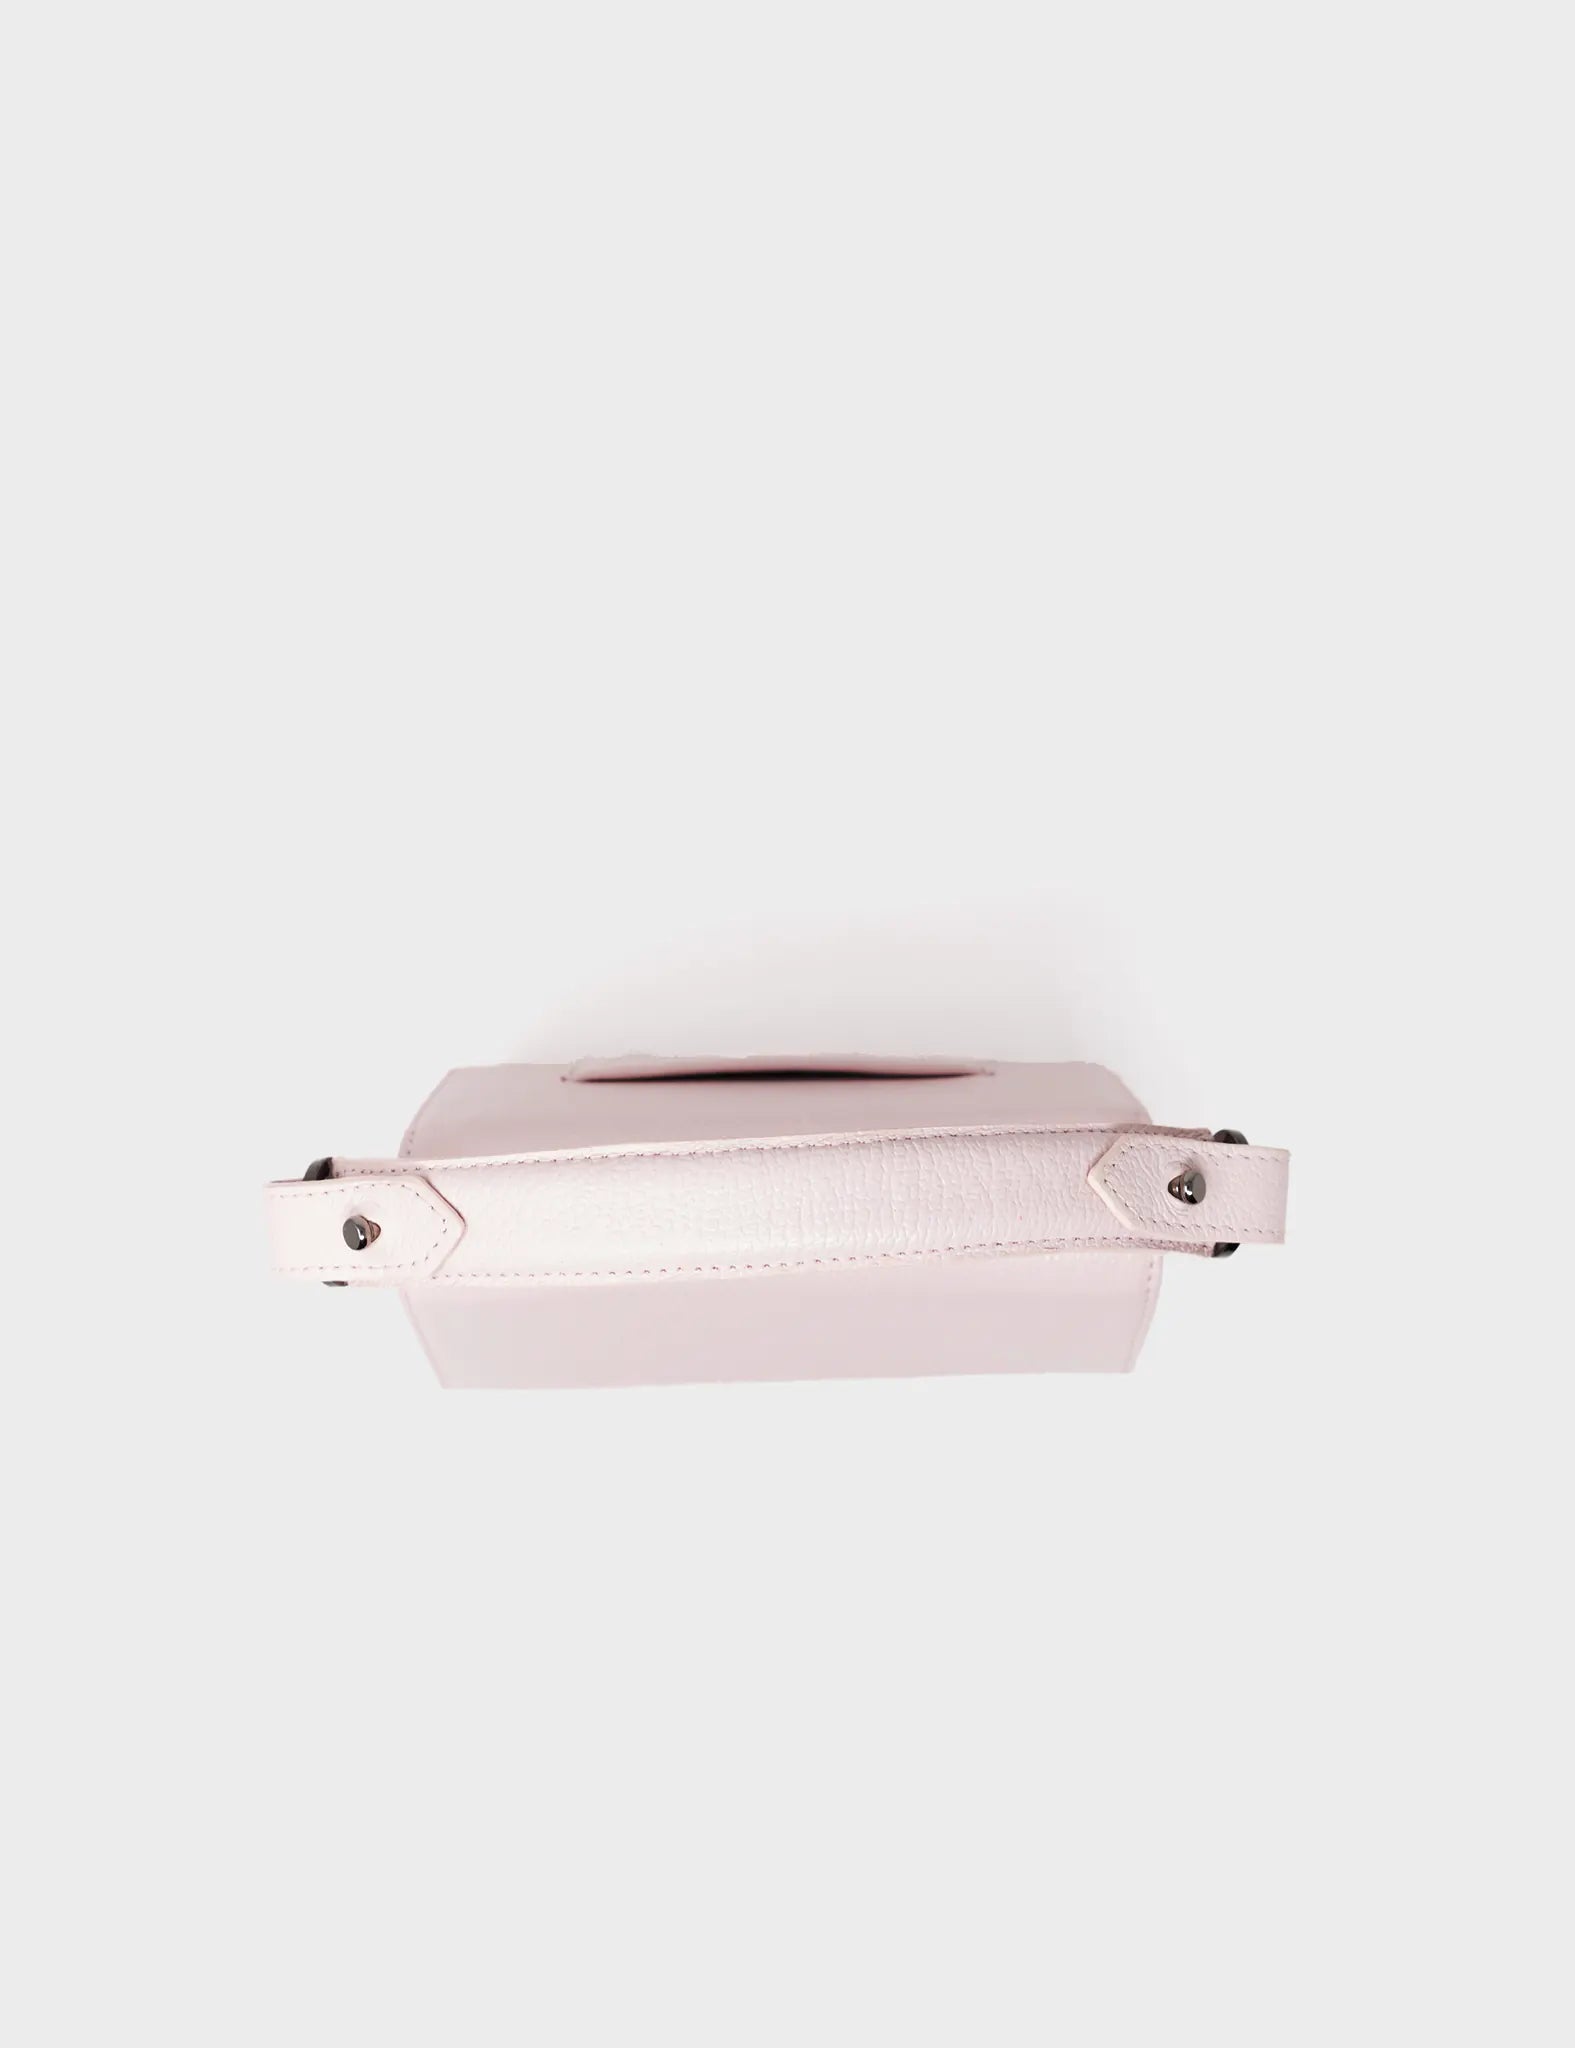 Anastasio Micro Crossbody Handbag Powder Pink Leather - Eyes Embroidery - top view